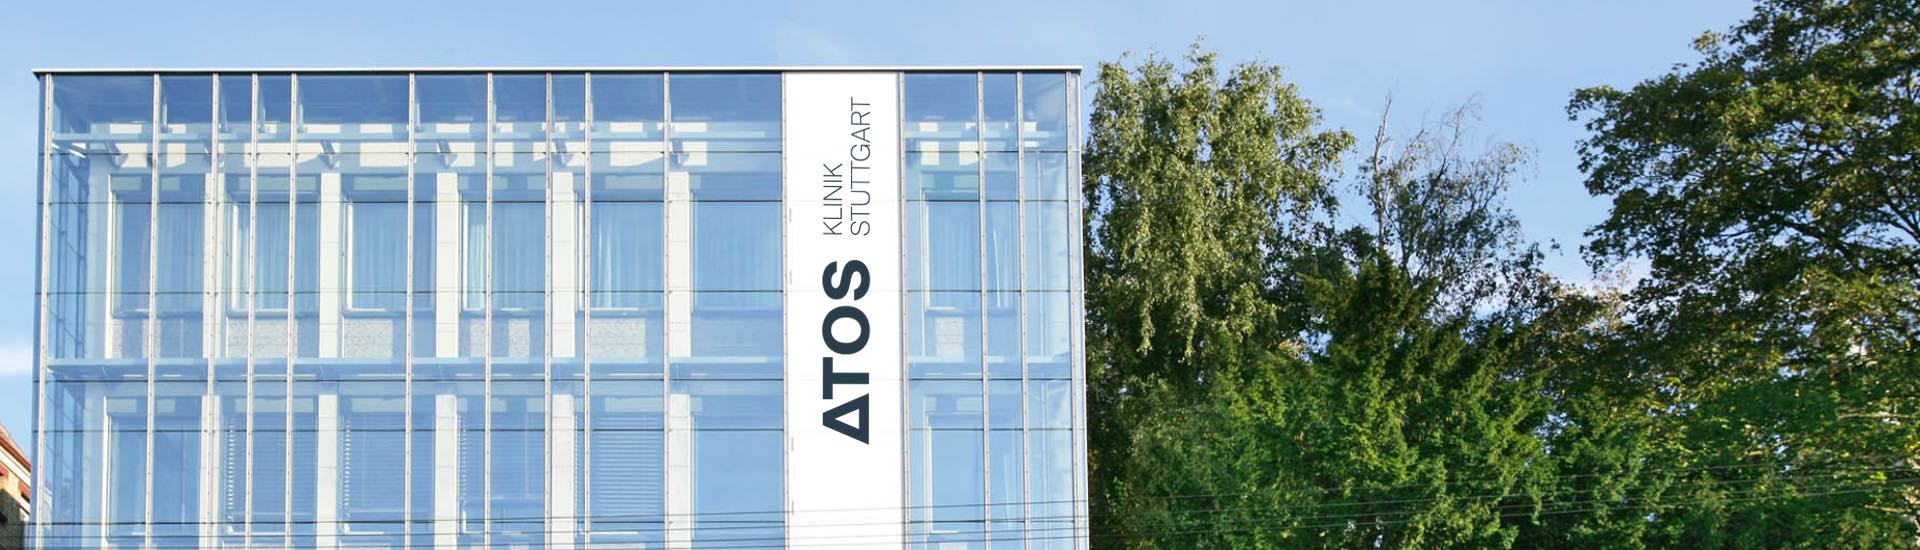 ATOS Klinik Stuttgart